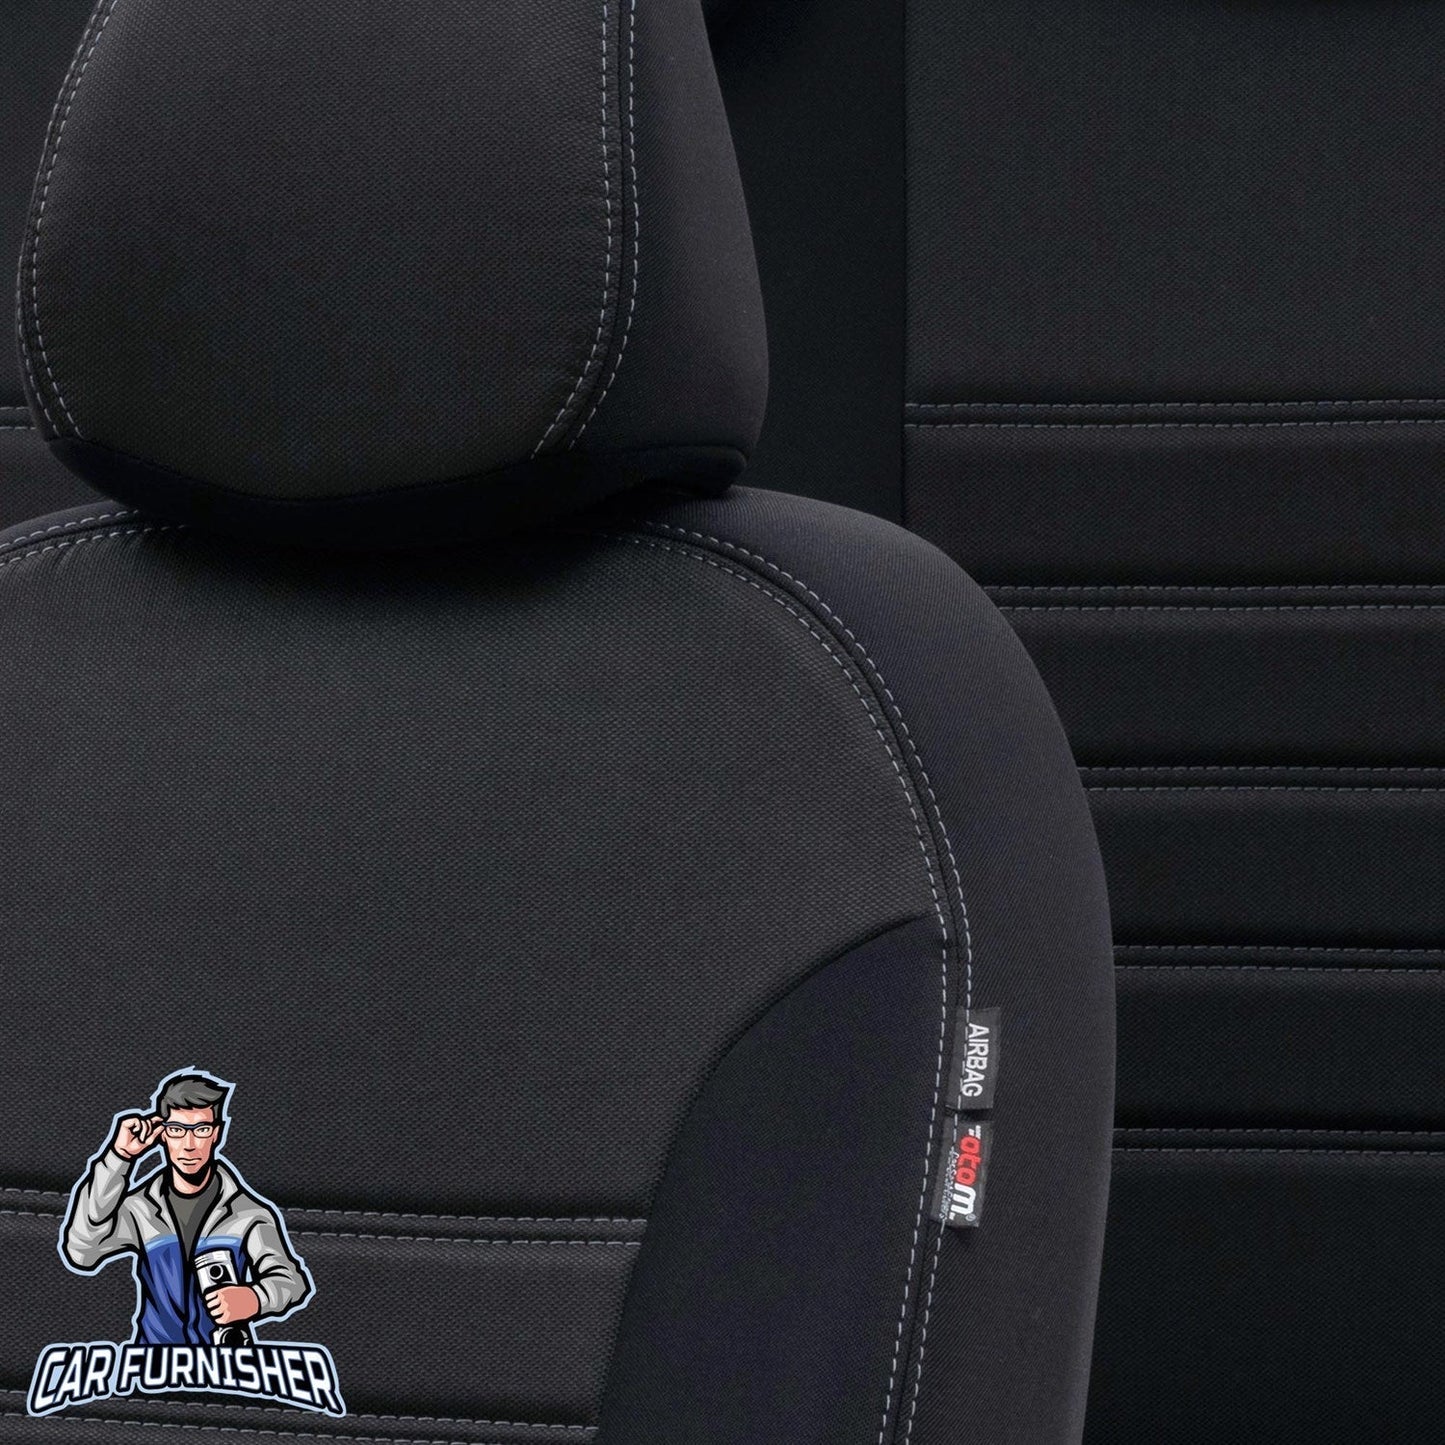 Dacia Sandero Seat Covers Original Jacquard Design Black Jacquard Fabric